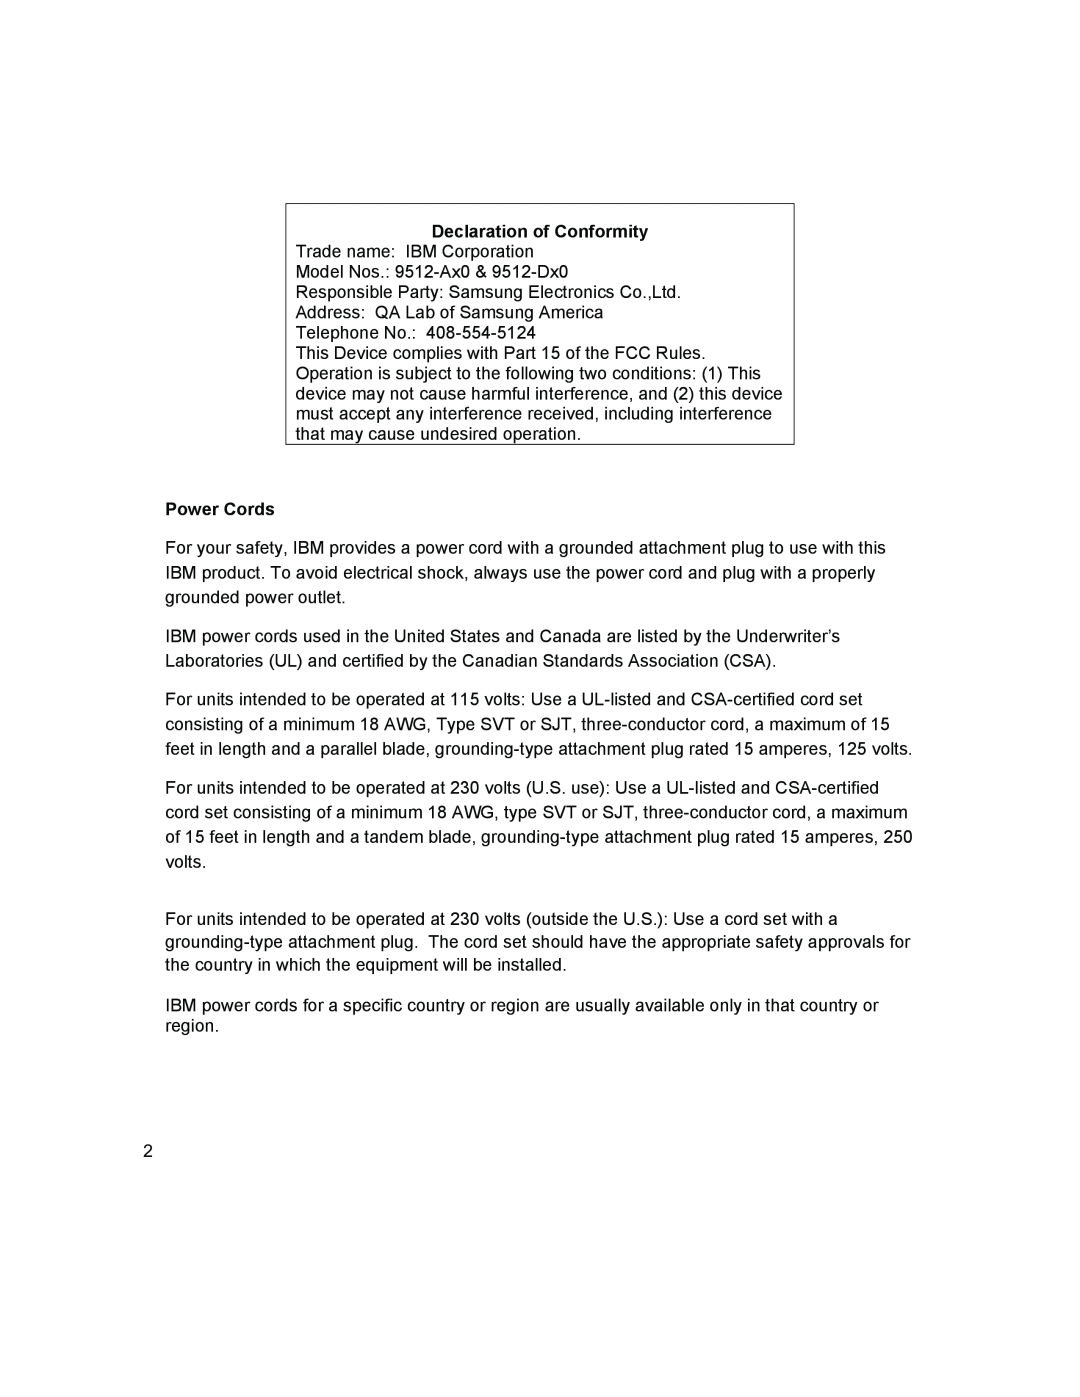 IBM T541A manual Declaration of Conformity, Power Cords 